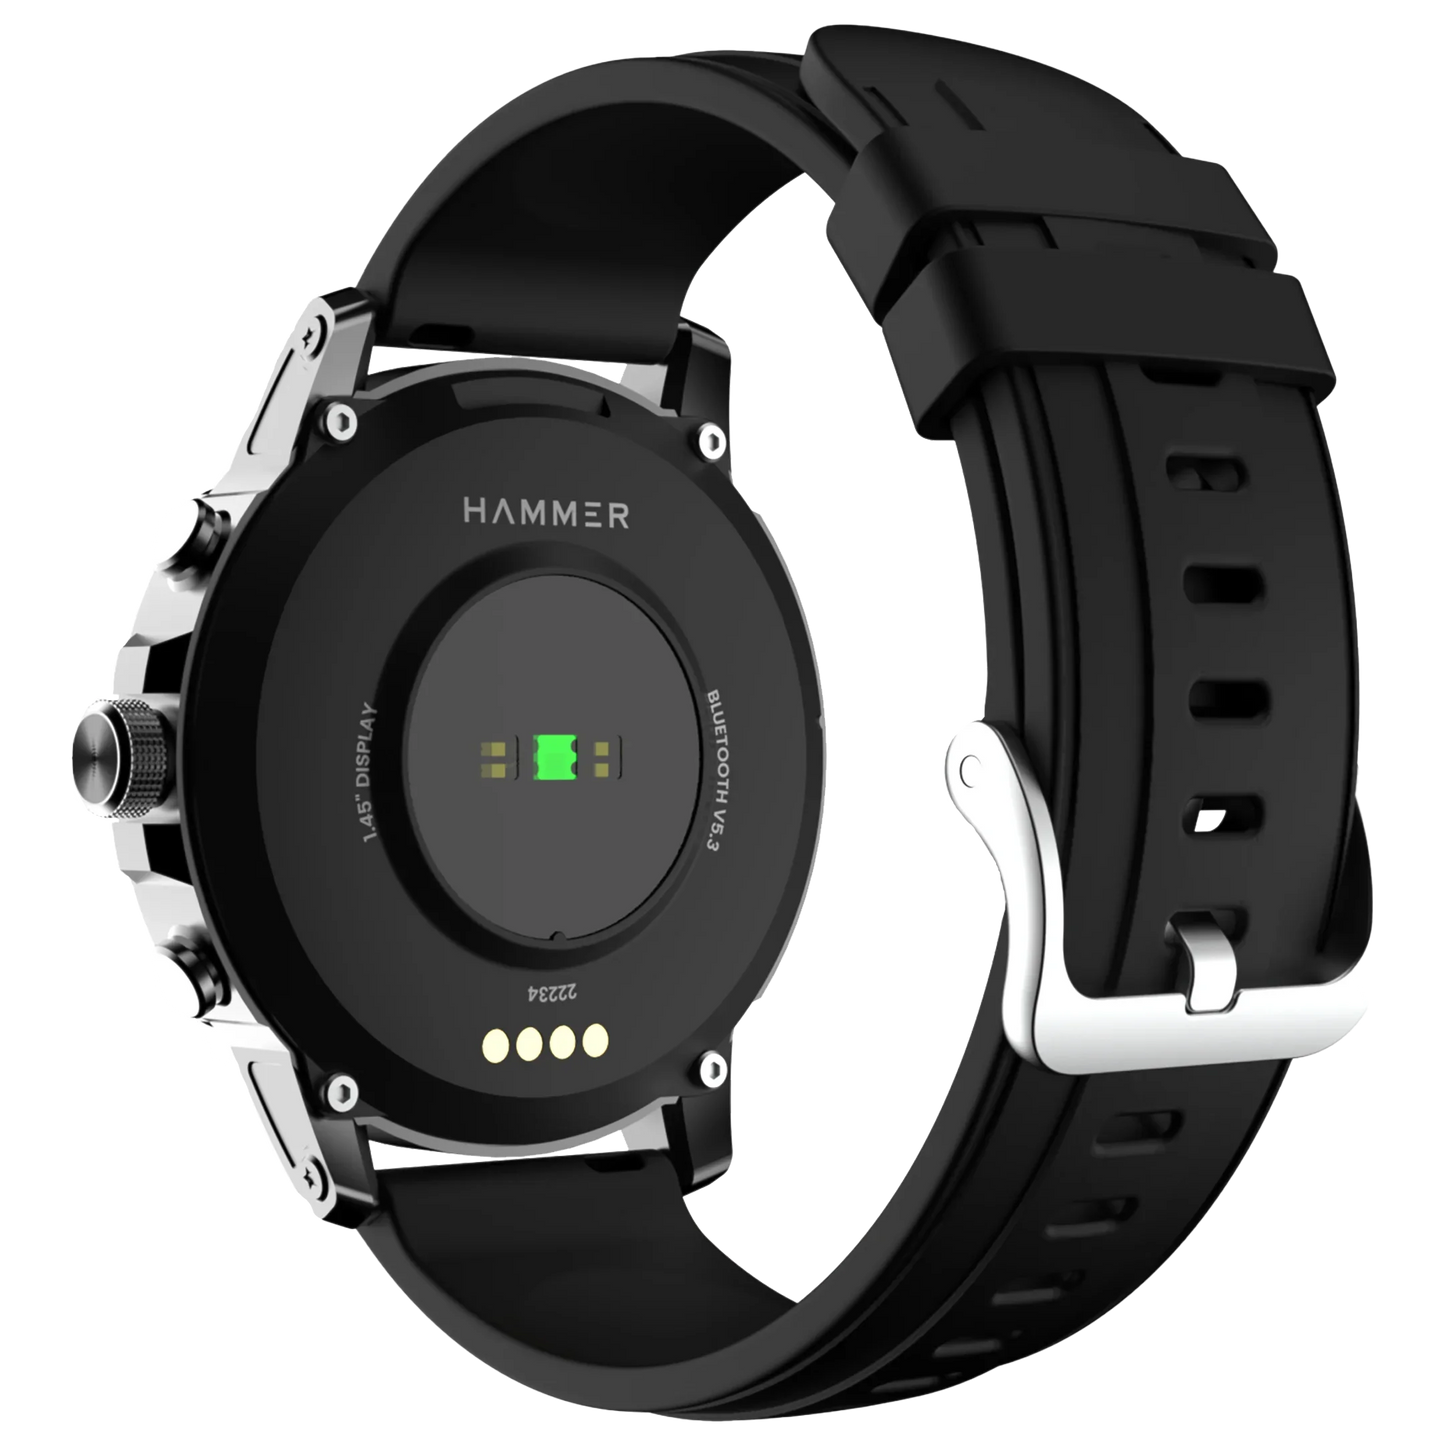 Hammer Luxor 1.45 Amoled Bluetooth Calling Smartwatch